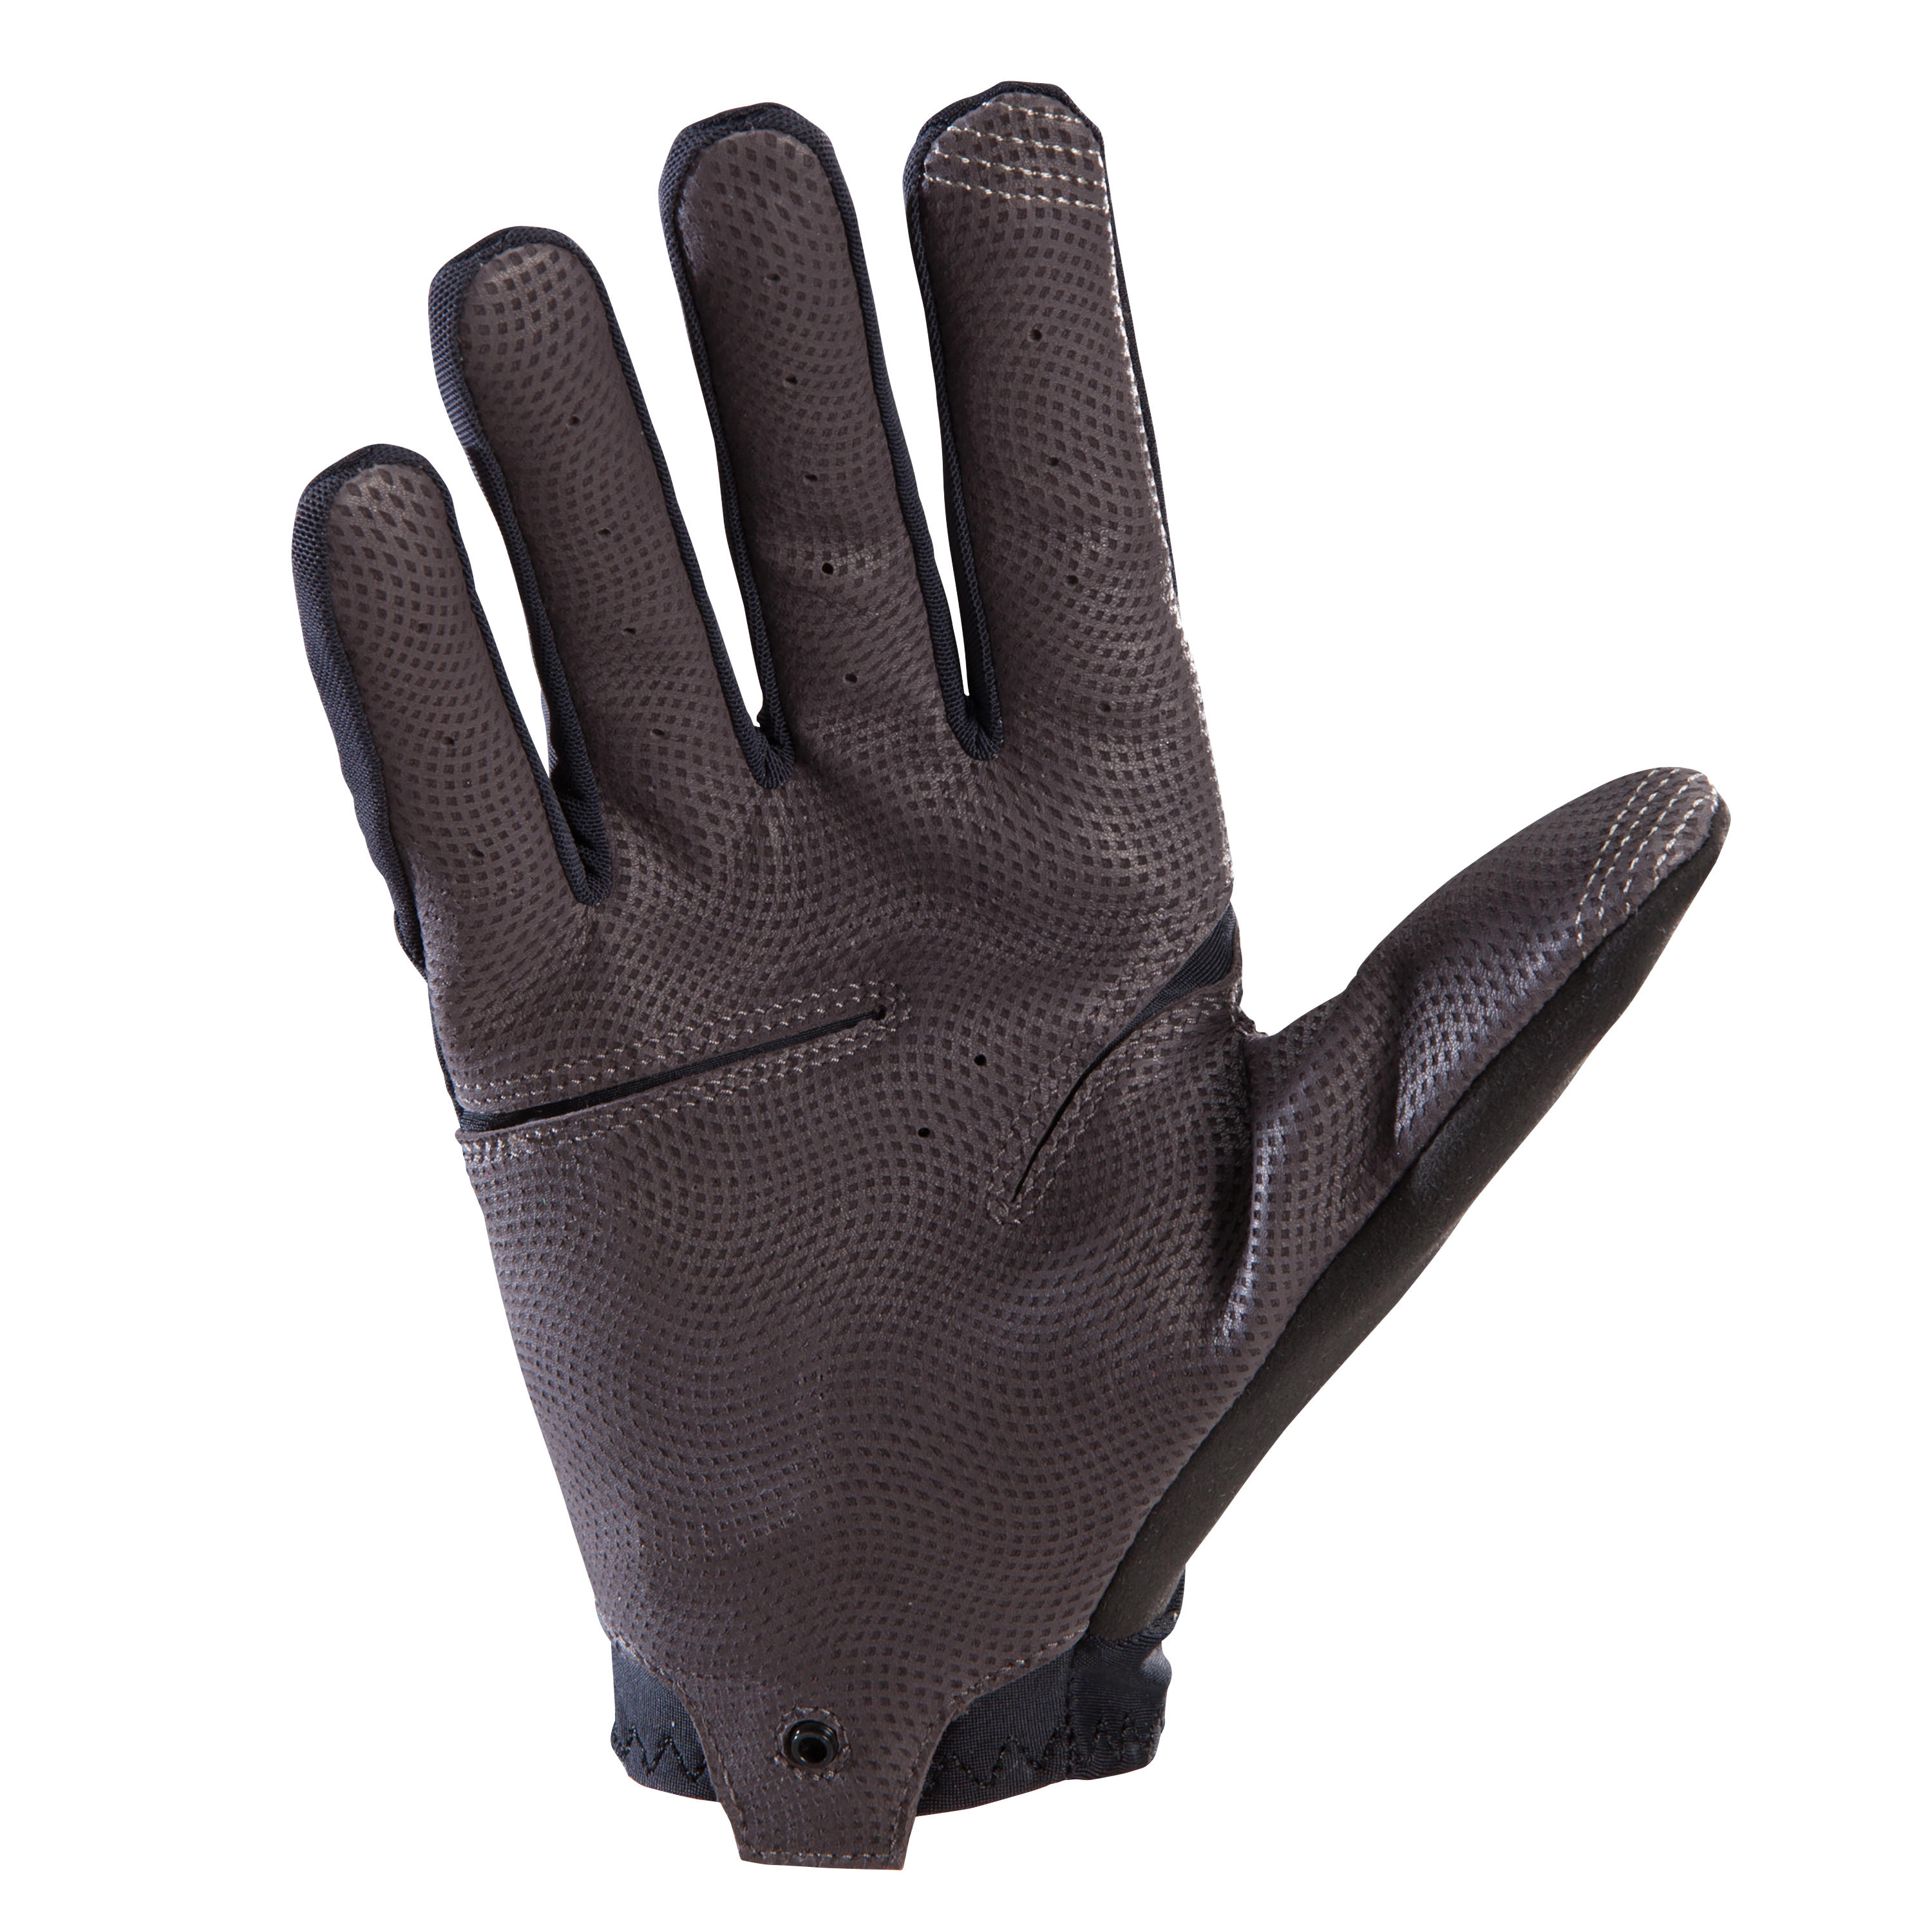 xc mtb gloves